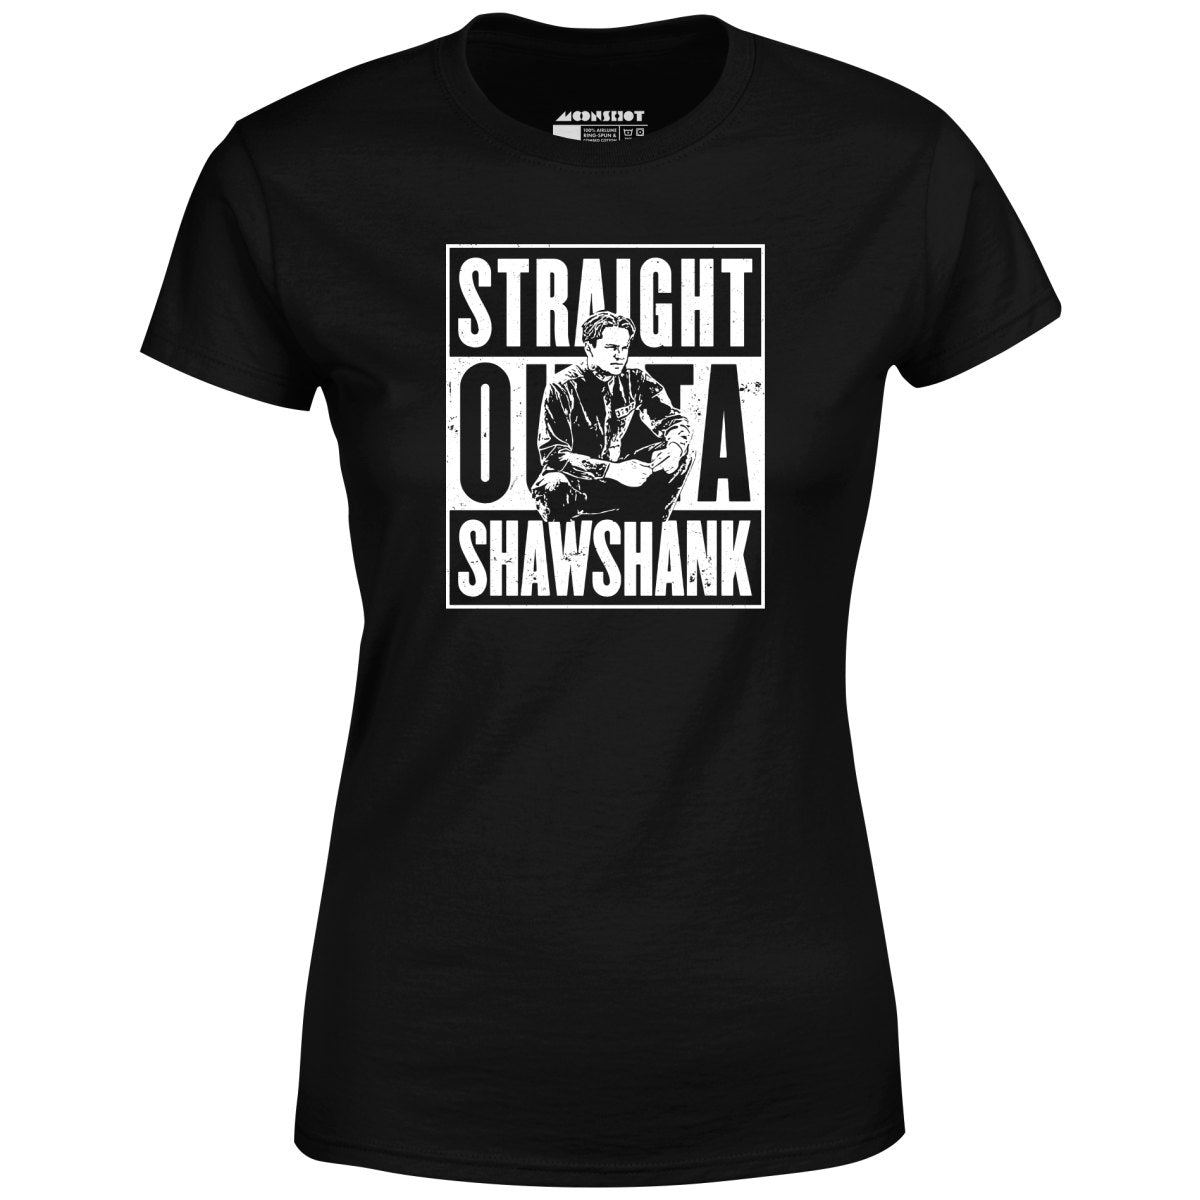 Straight Outta Shawshank - Women's T-Shirt